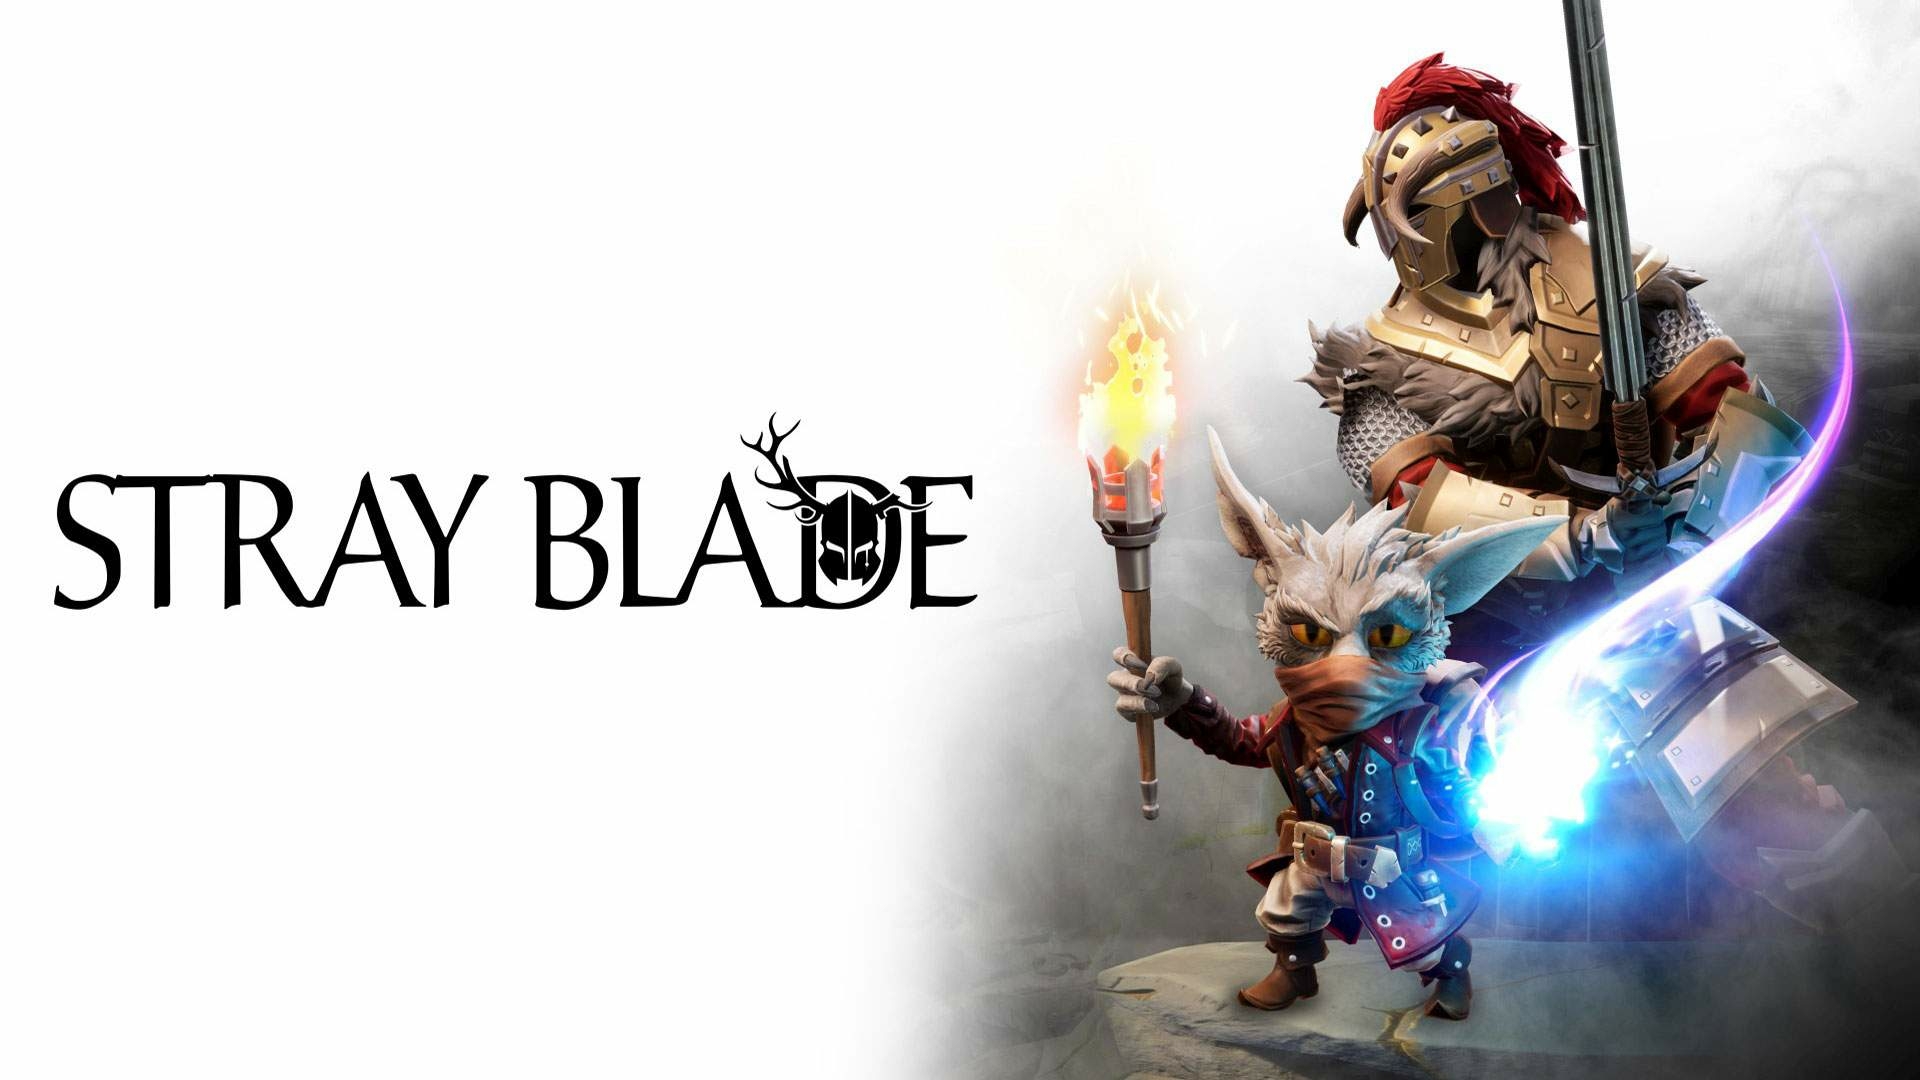 Video: Stray Blade gameplay